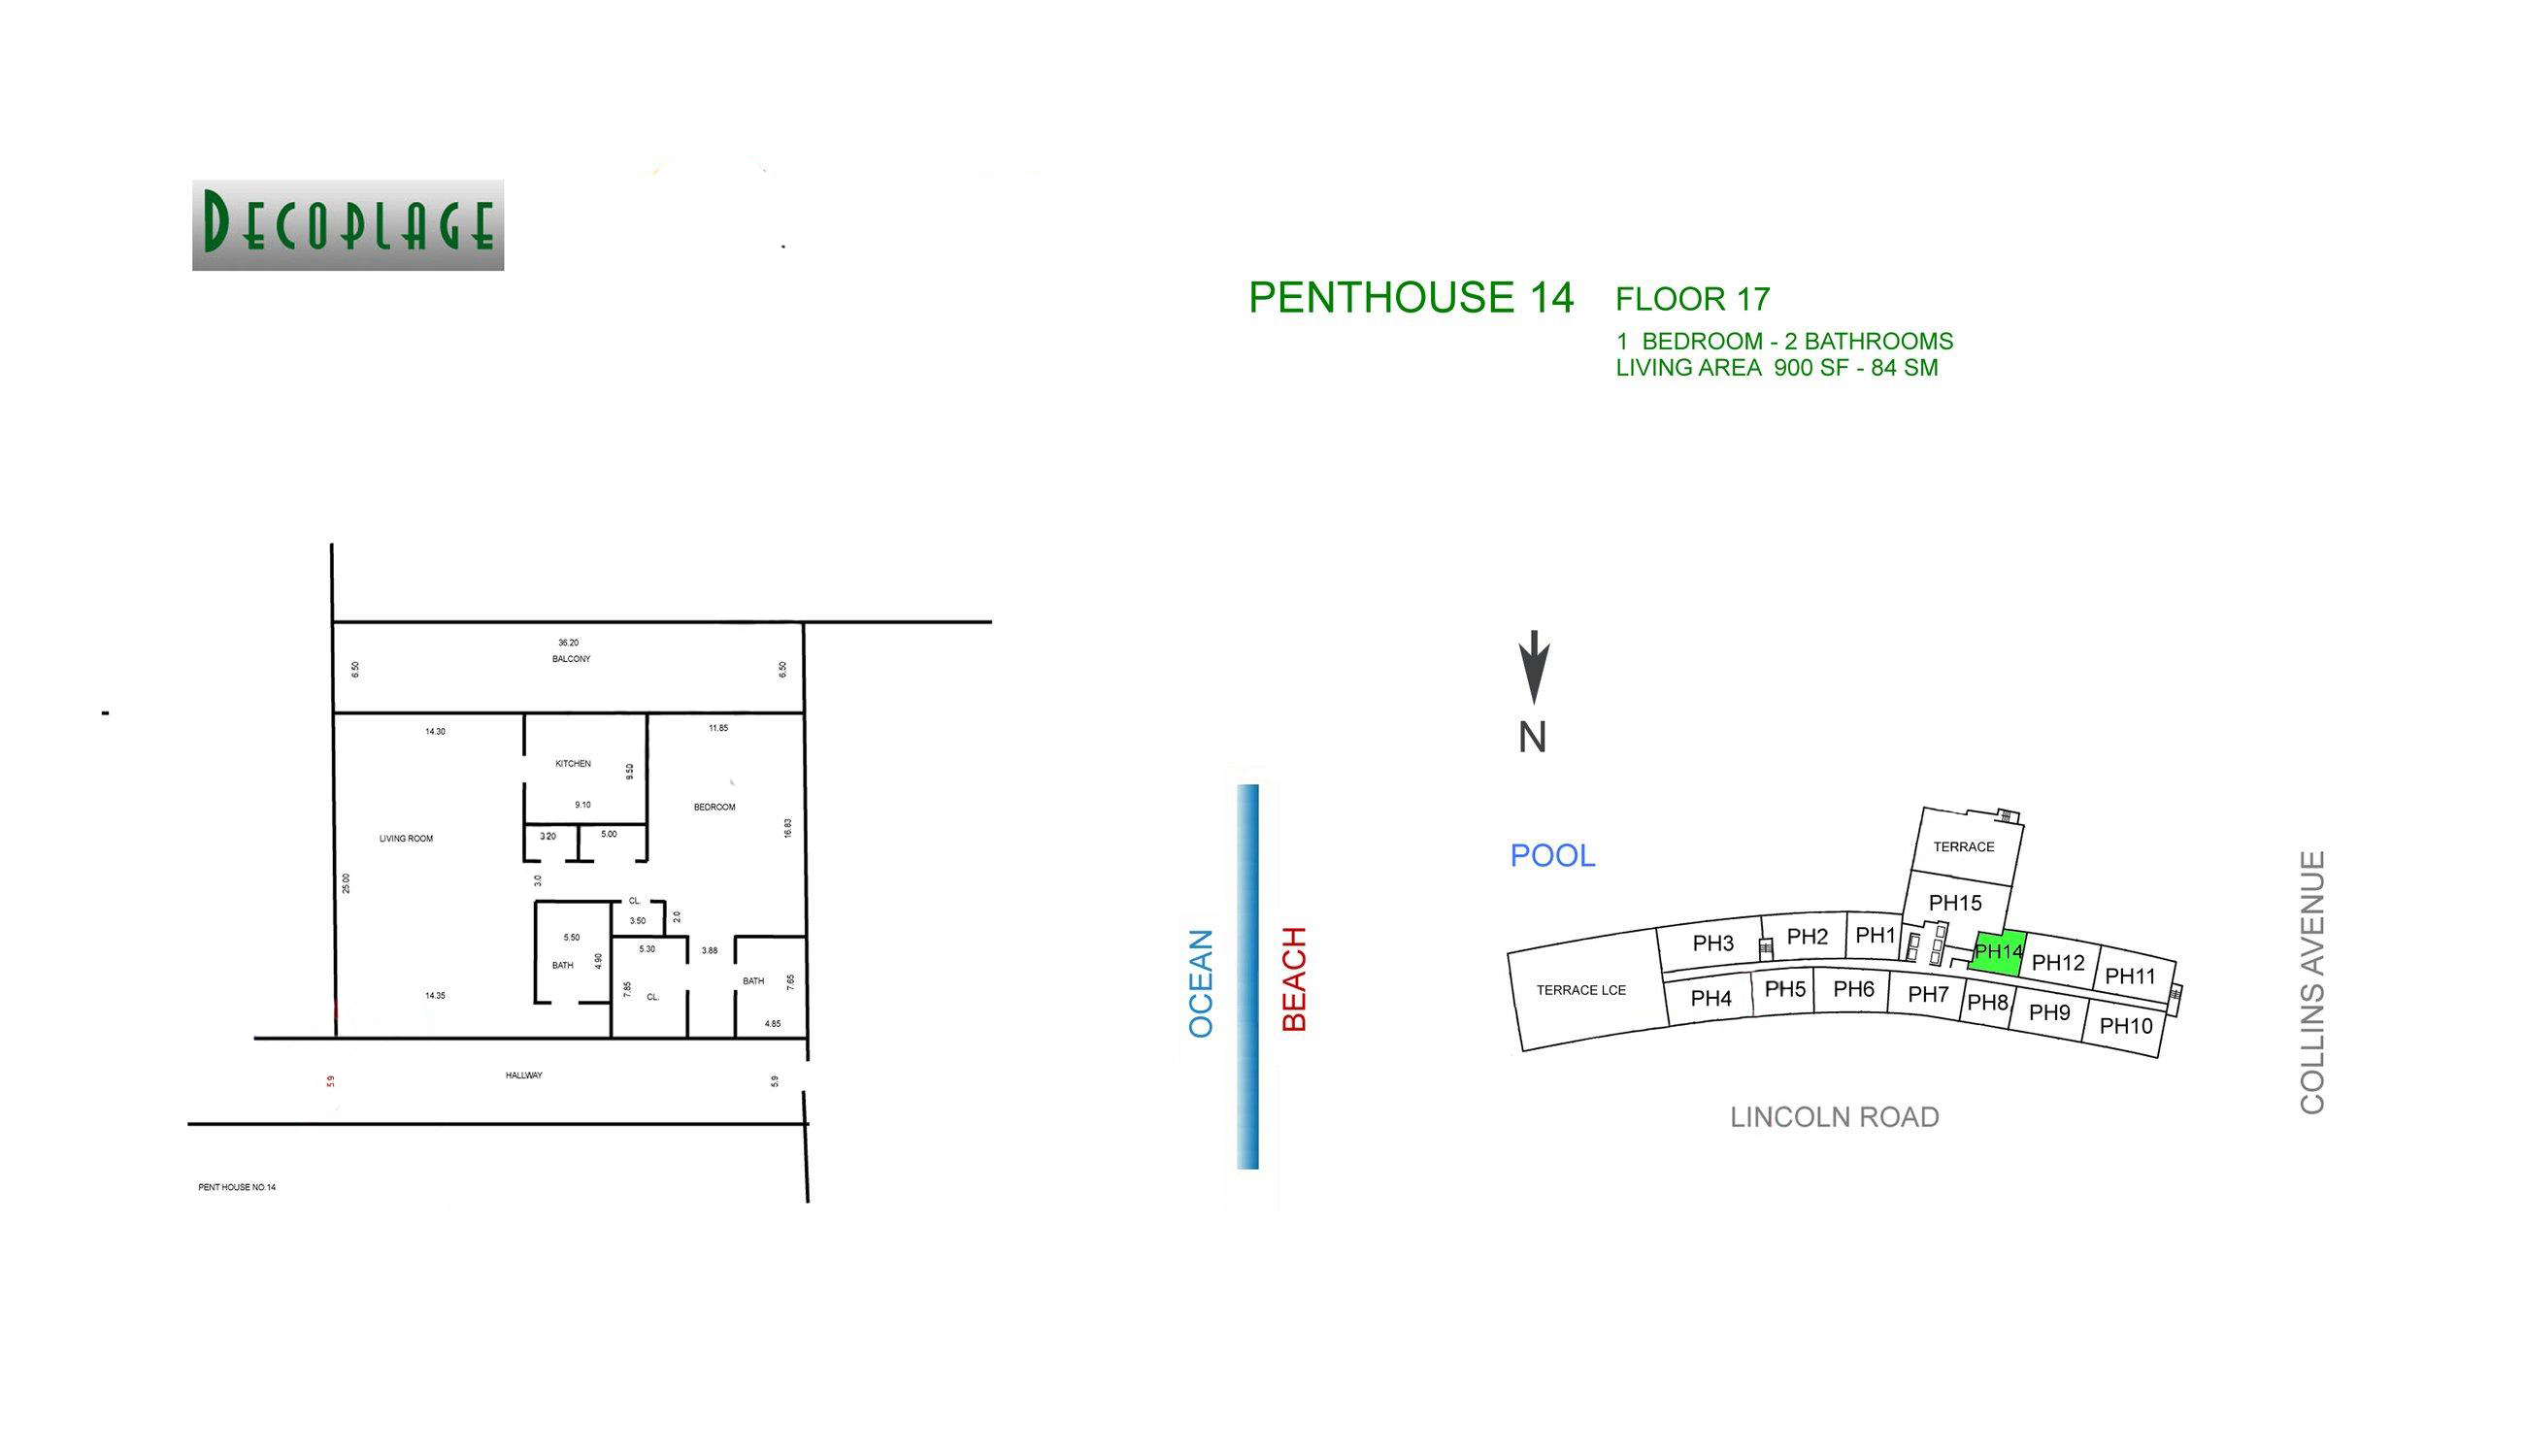 Decoplage Penthouse 14 Floors 17